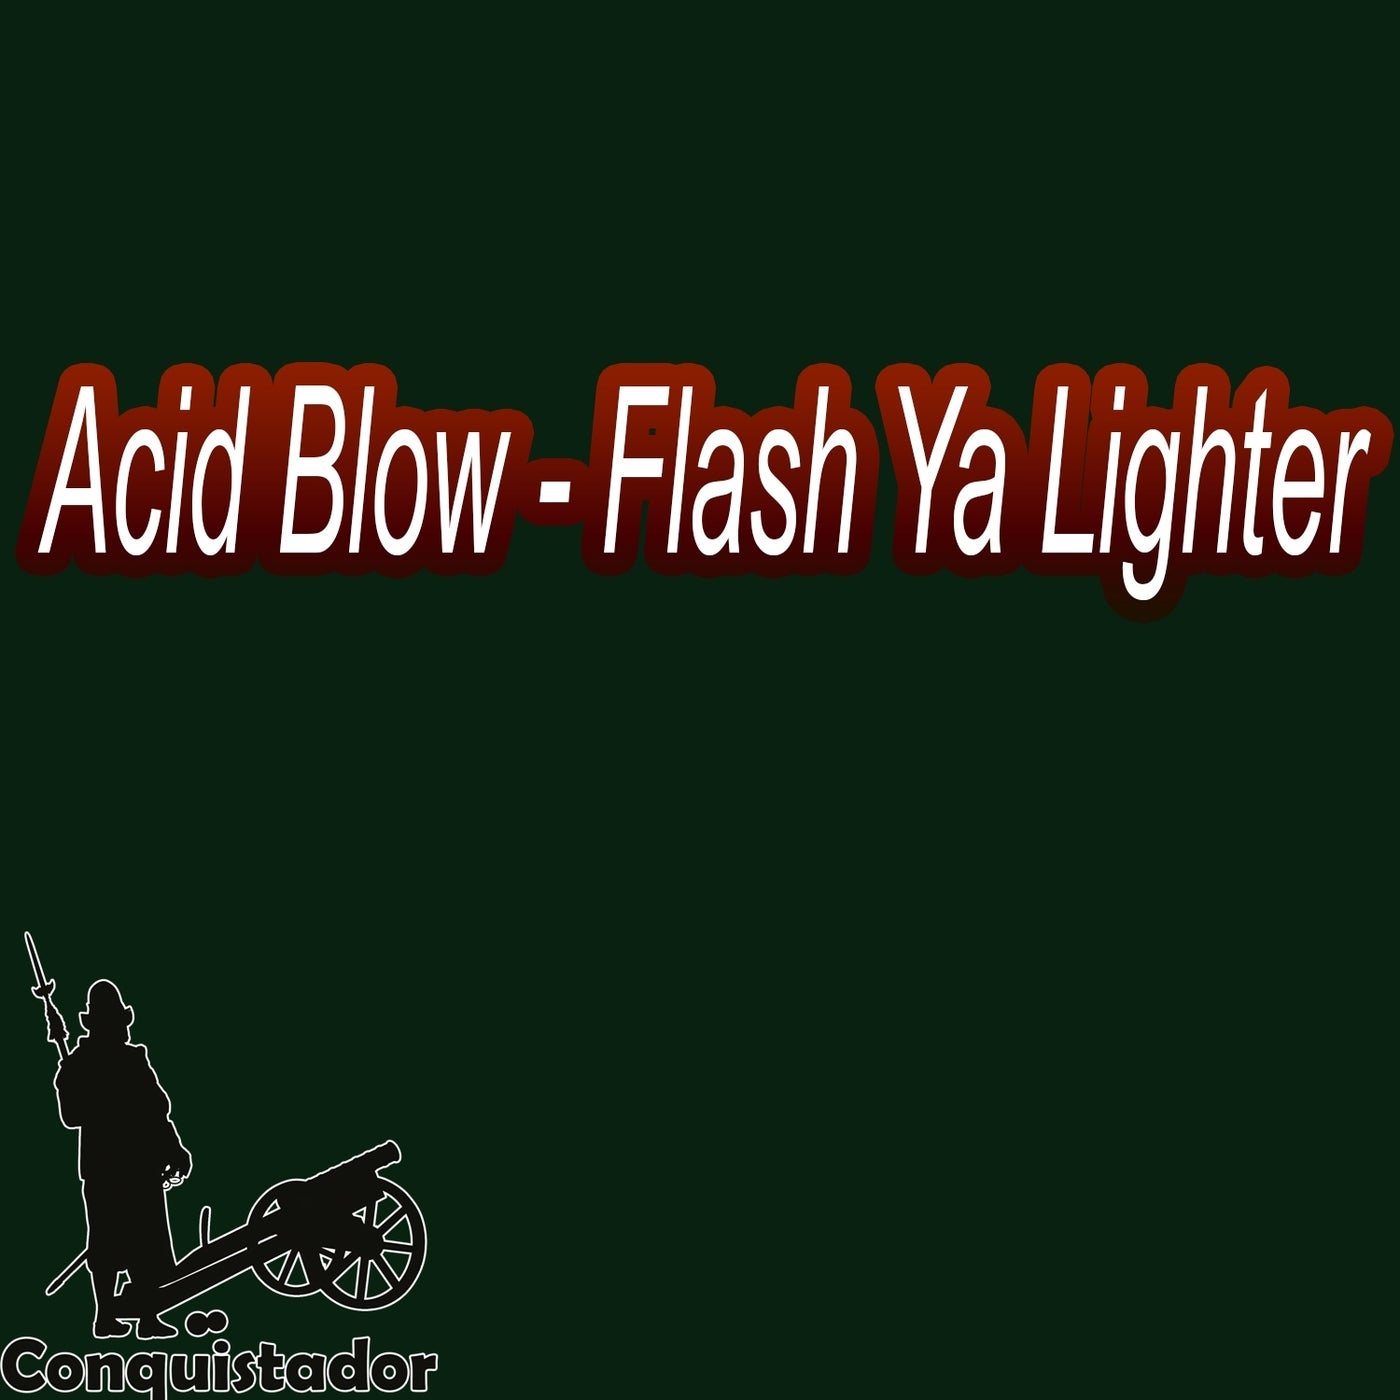 Flash Ya Lighter